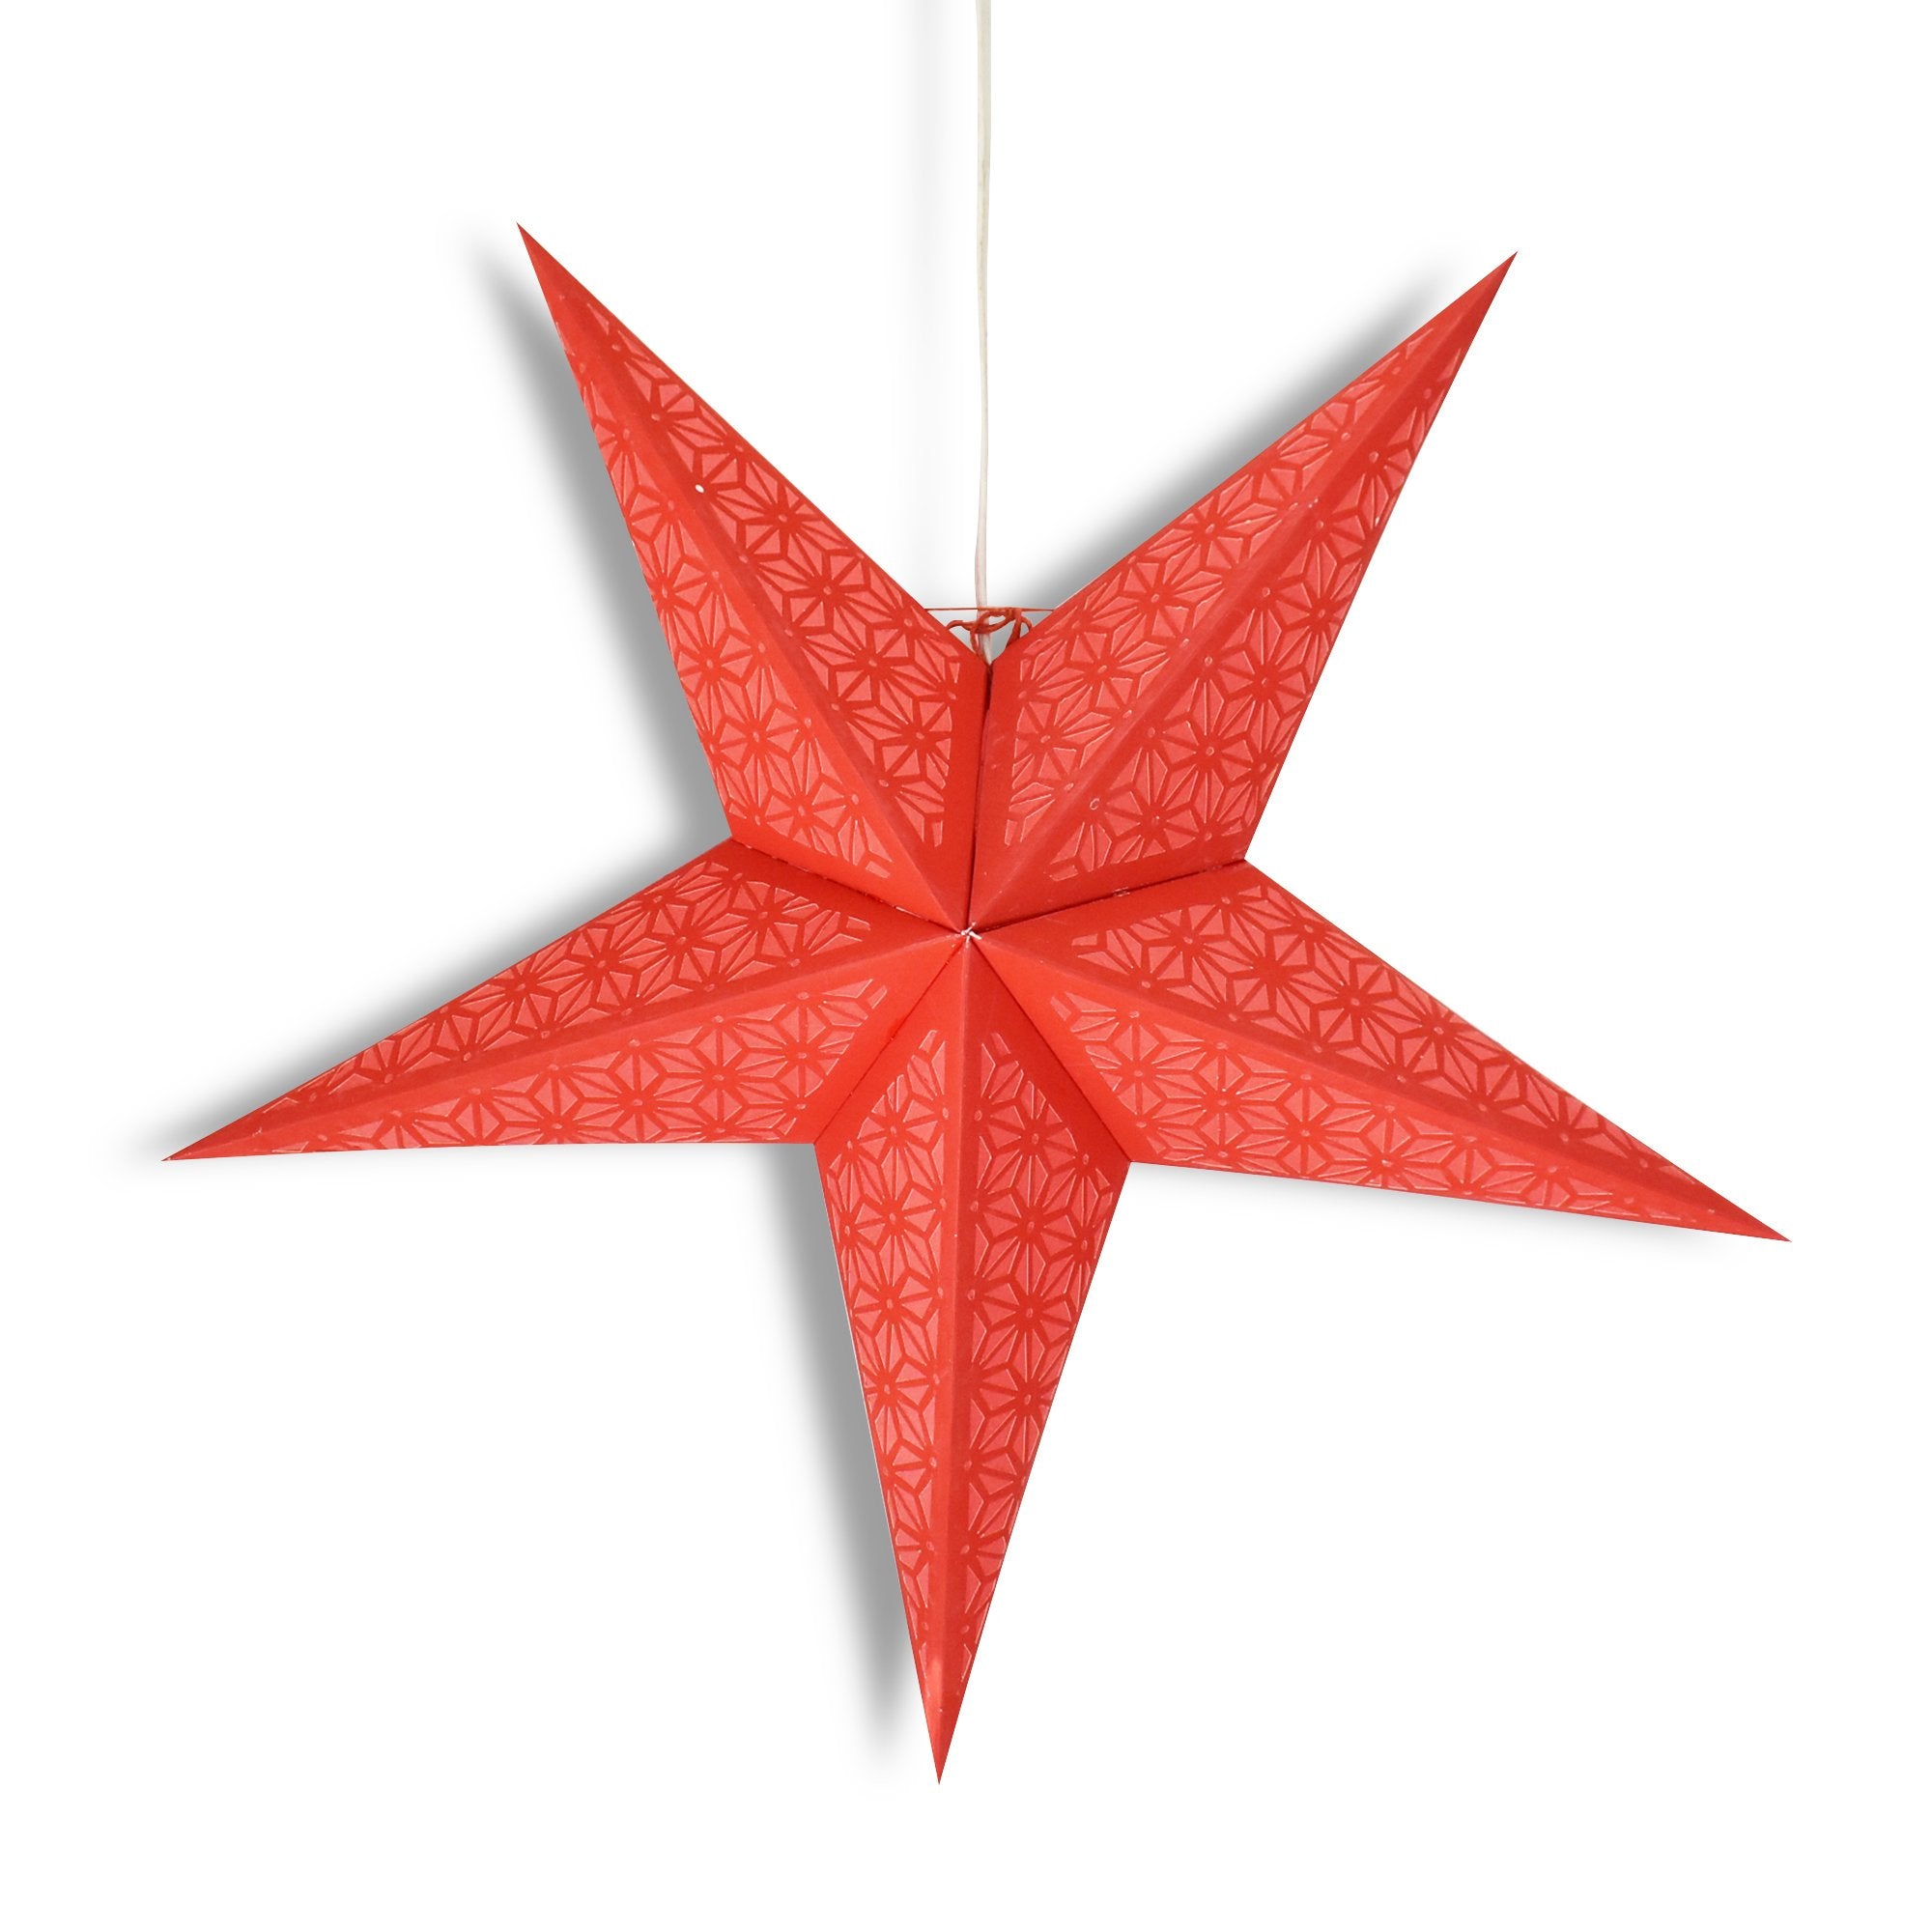 24" Red Geodesic Paper Star Lantern, Hanging Wedding & Party Decoration - PaperLanternStore.com - Paper Lanterns, Decor, Party Lights & More